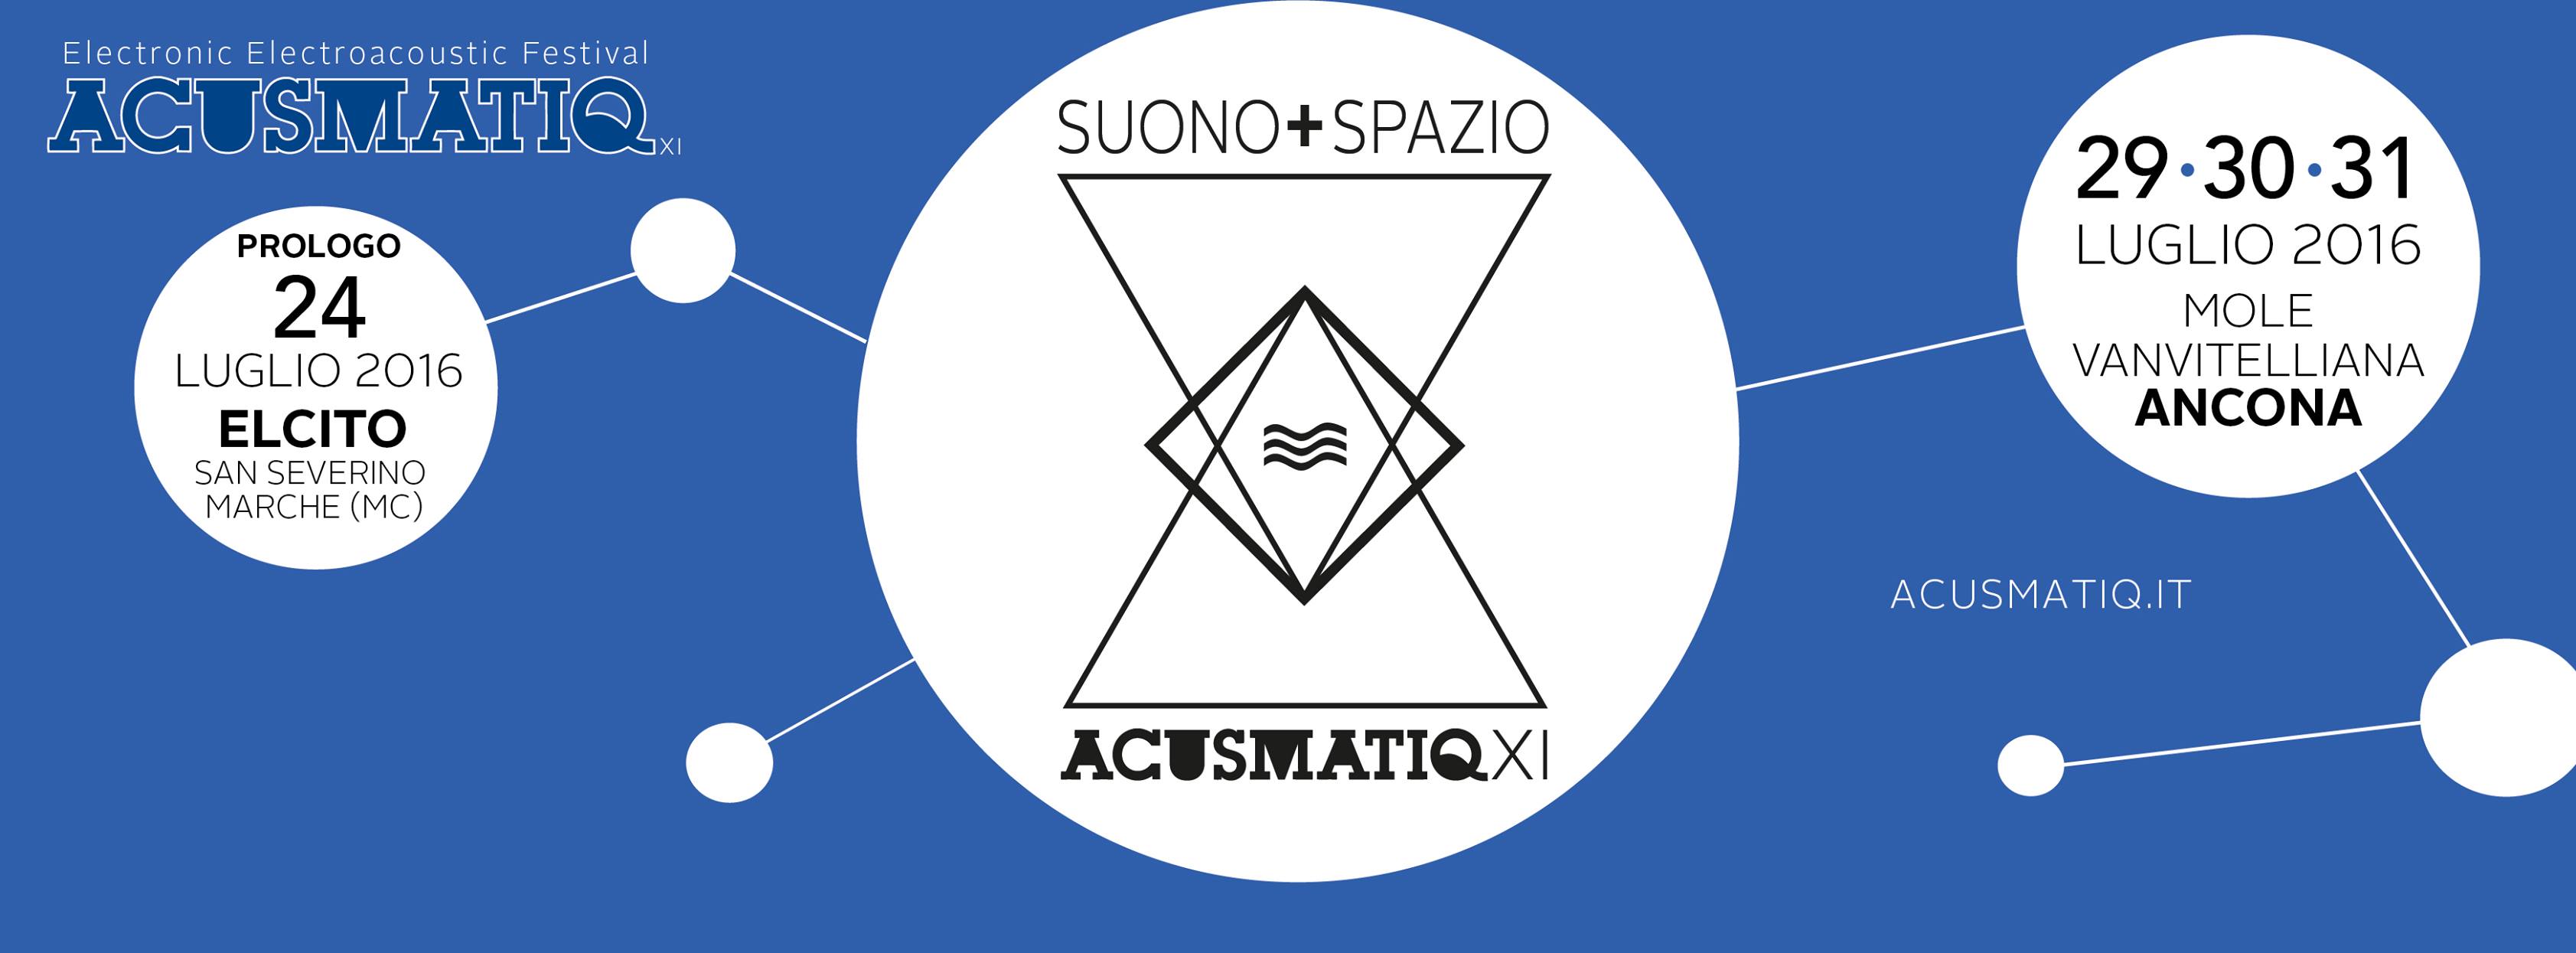 Acusmatiq, festival di musica e tecnologia ad Ancona